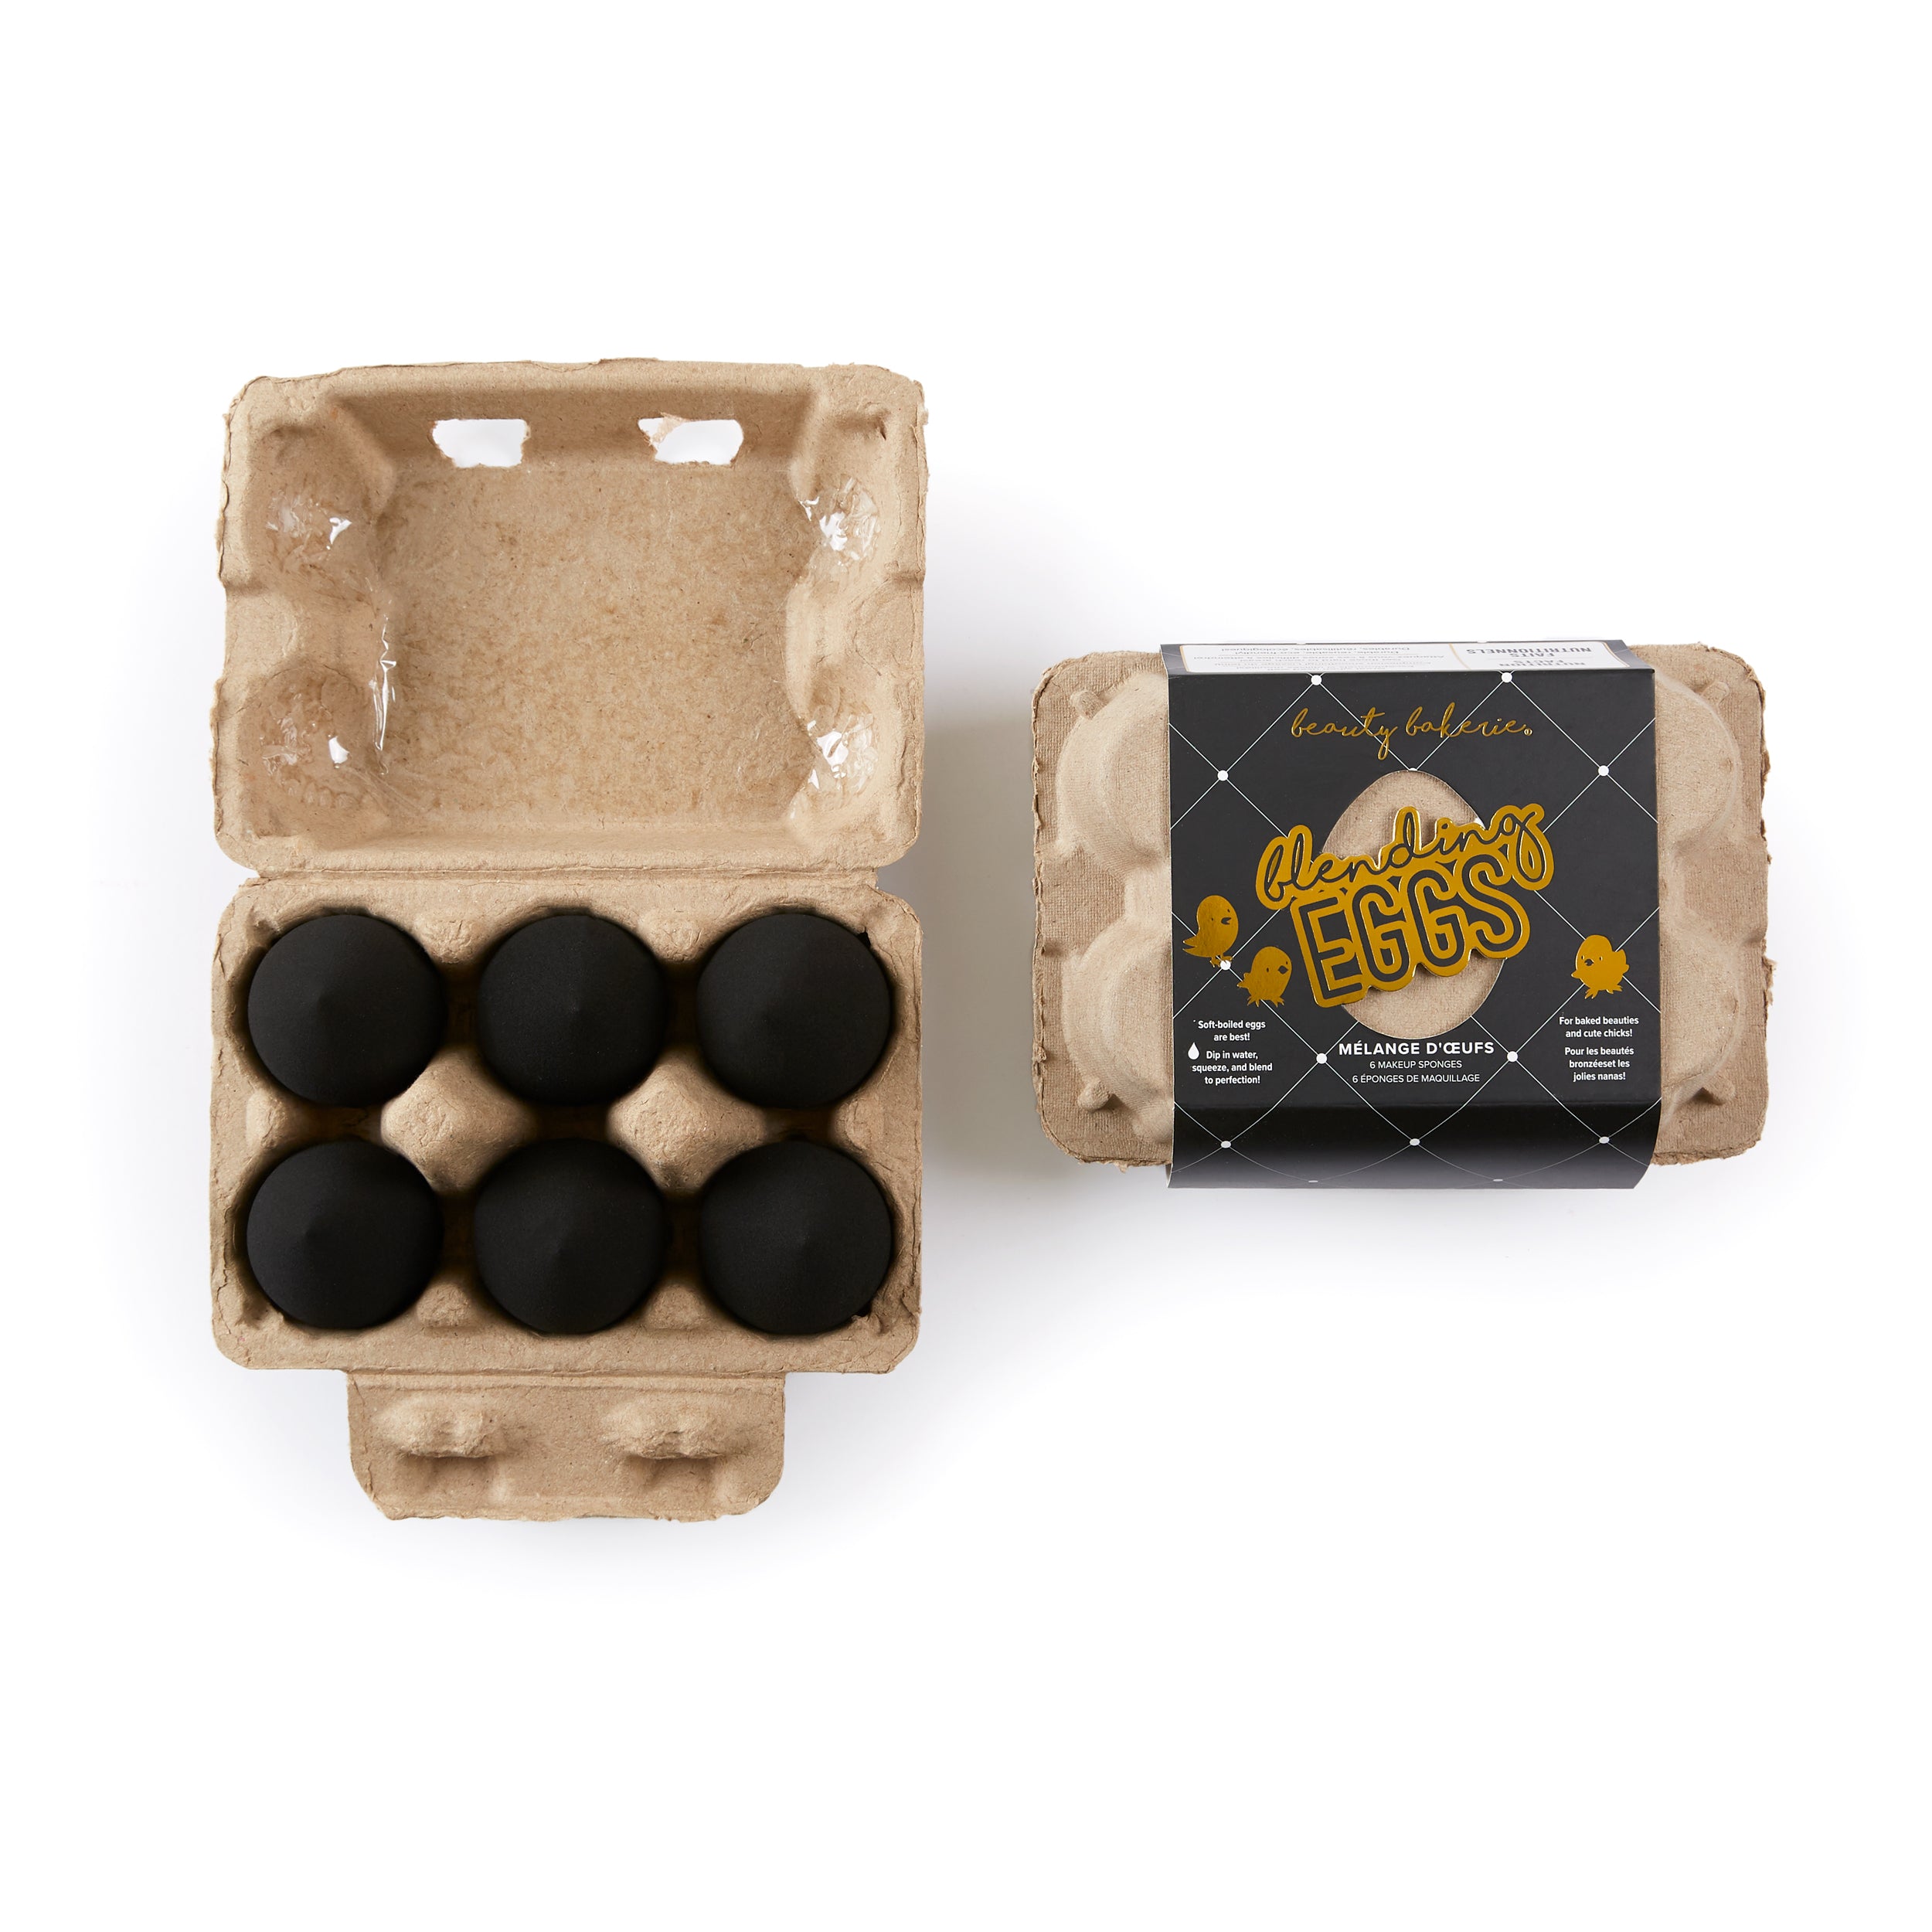 Black Egg-cellence Beauty Sponges